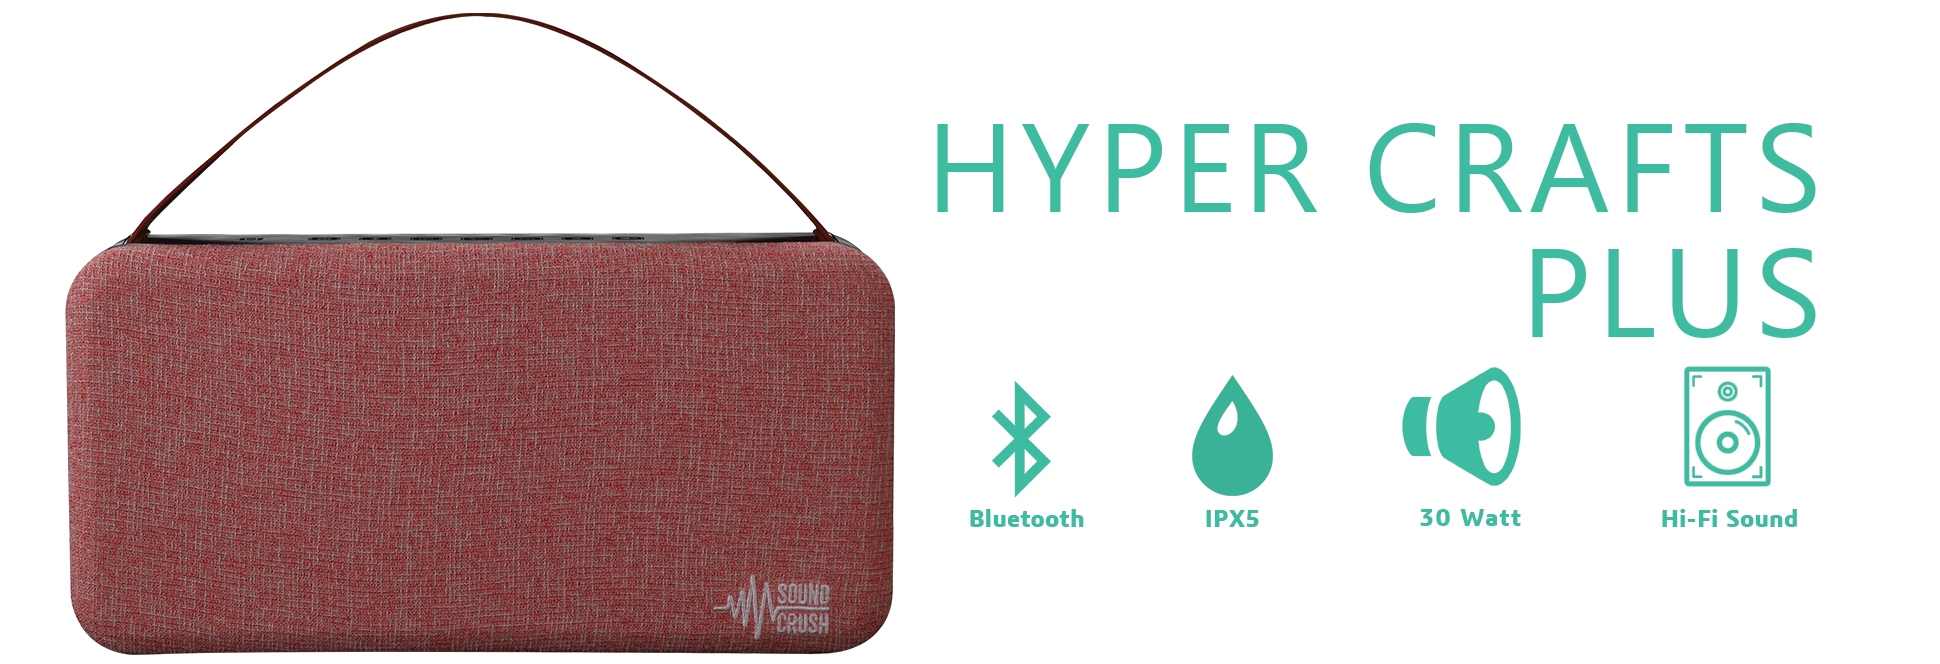 Hyper Crafts Plus Portable Bluetooth Home Speaker